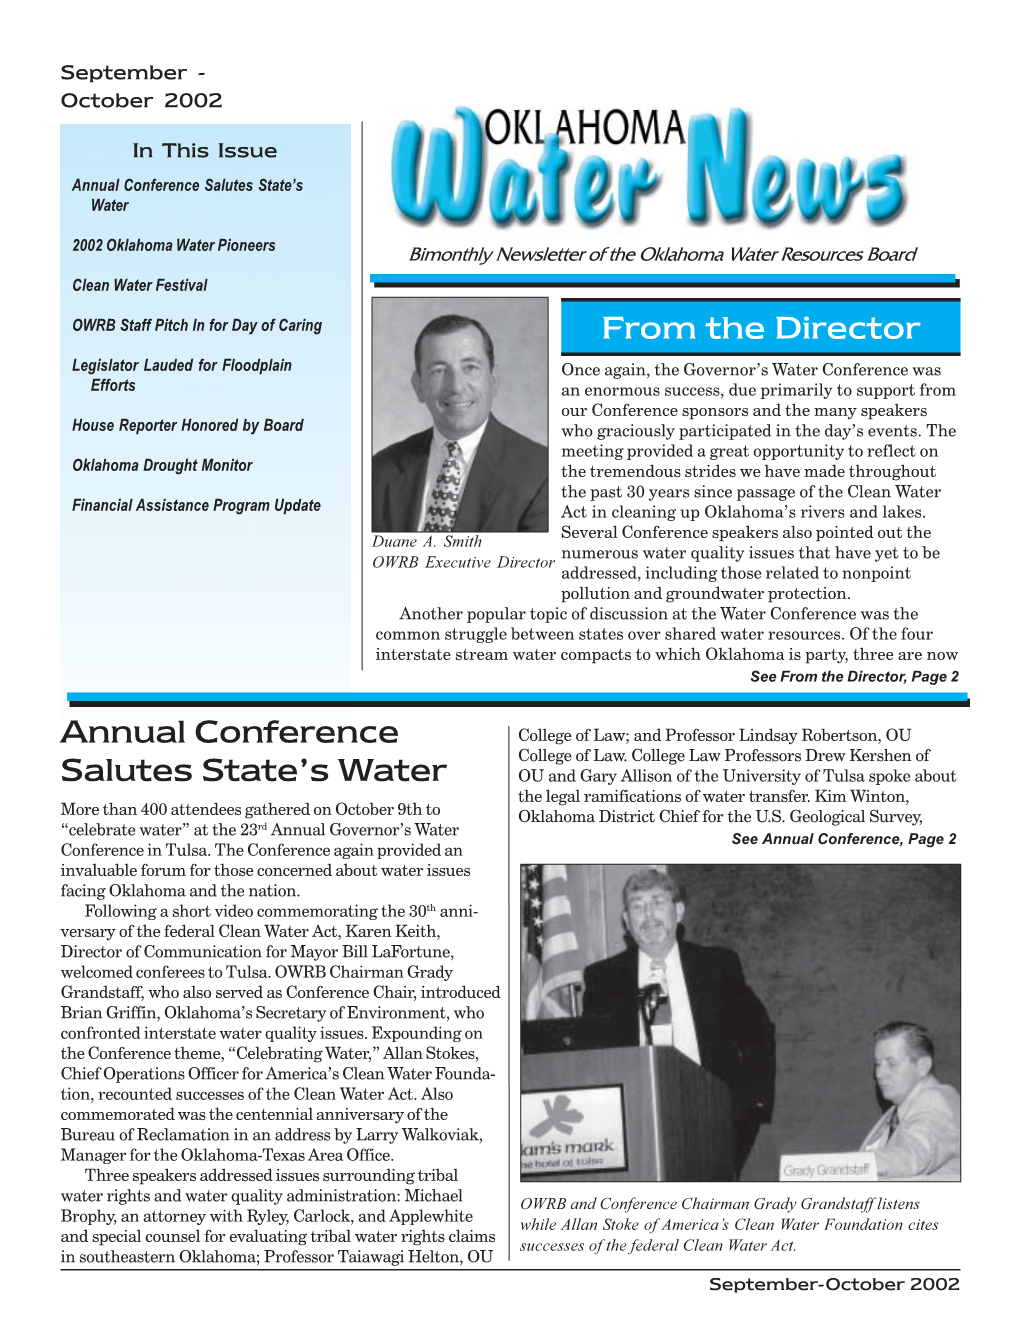 Oklahoma Water News 2002